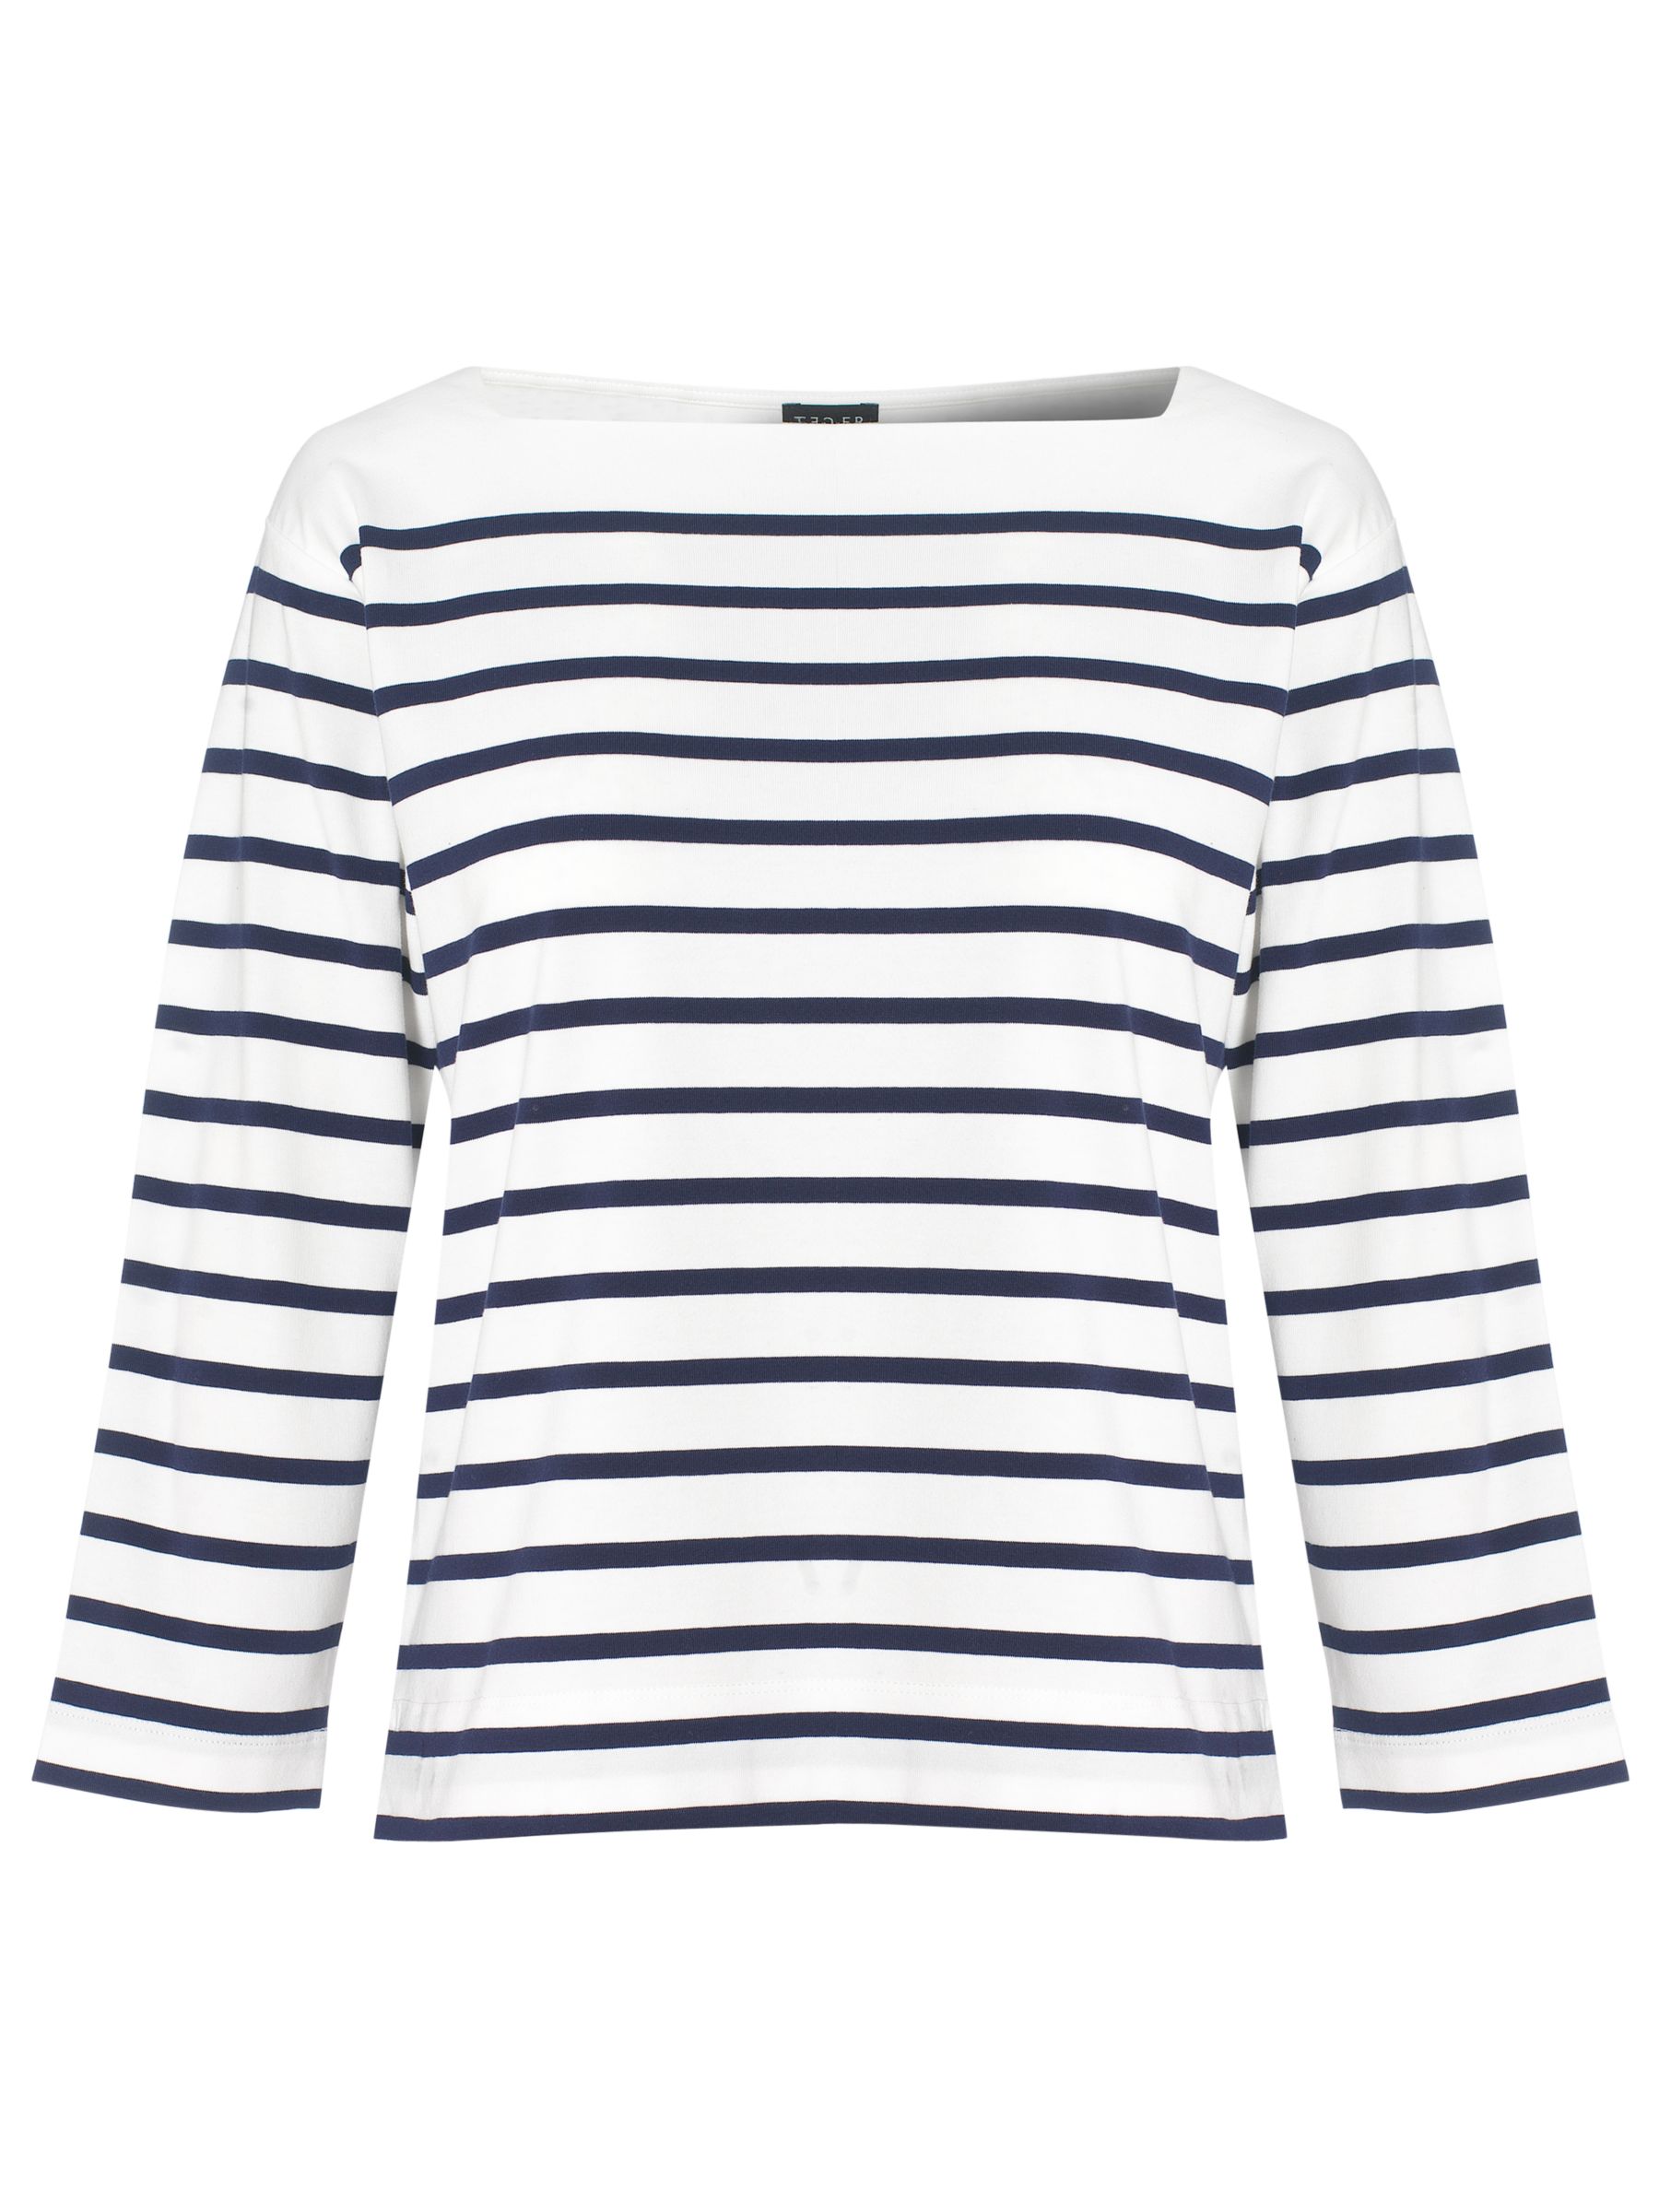 Breton Stripe T-shirt, White